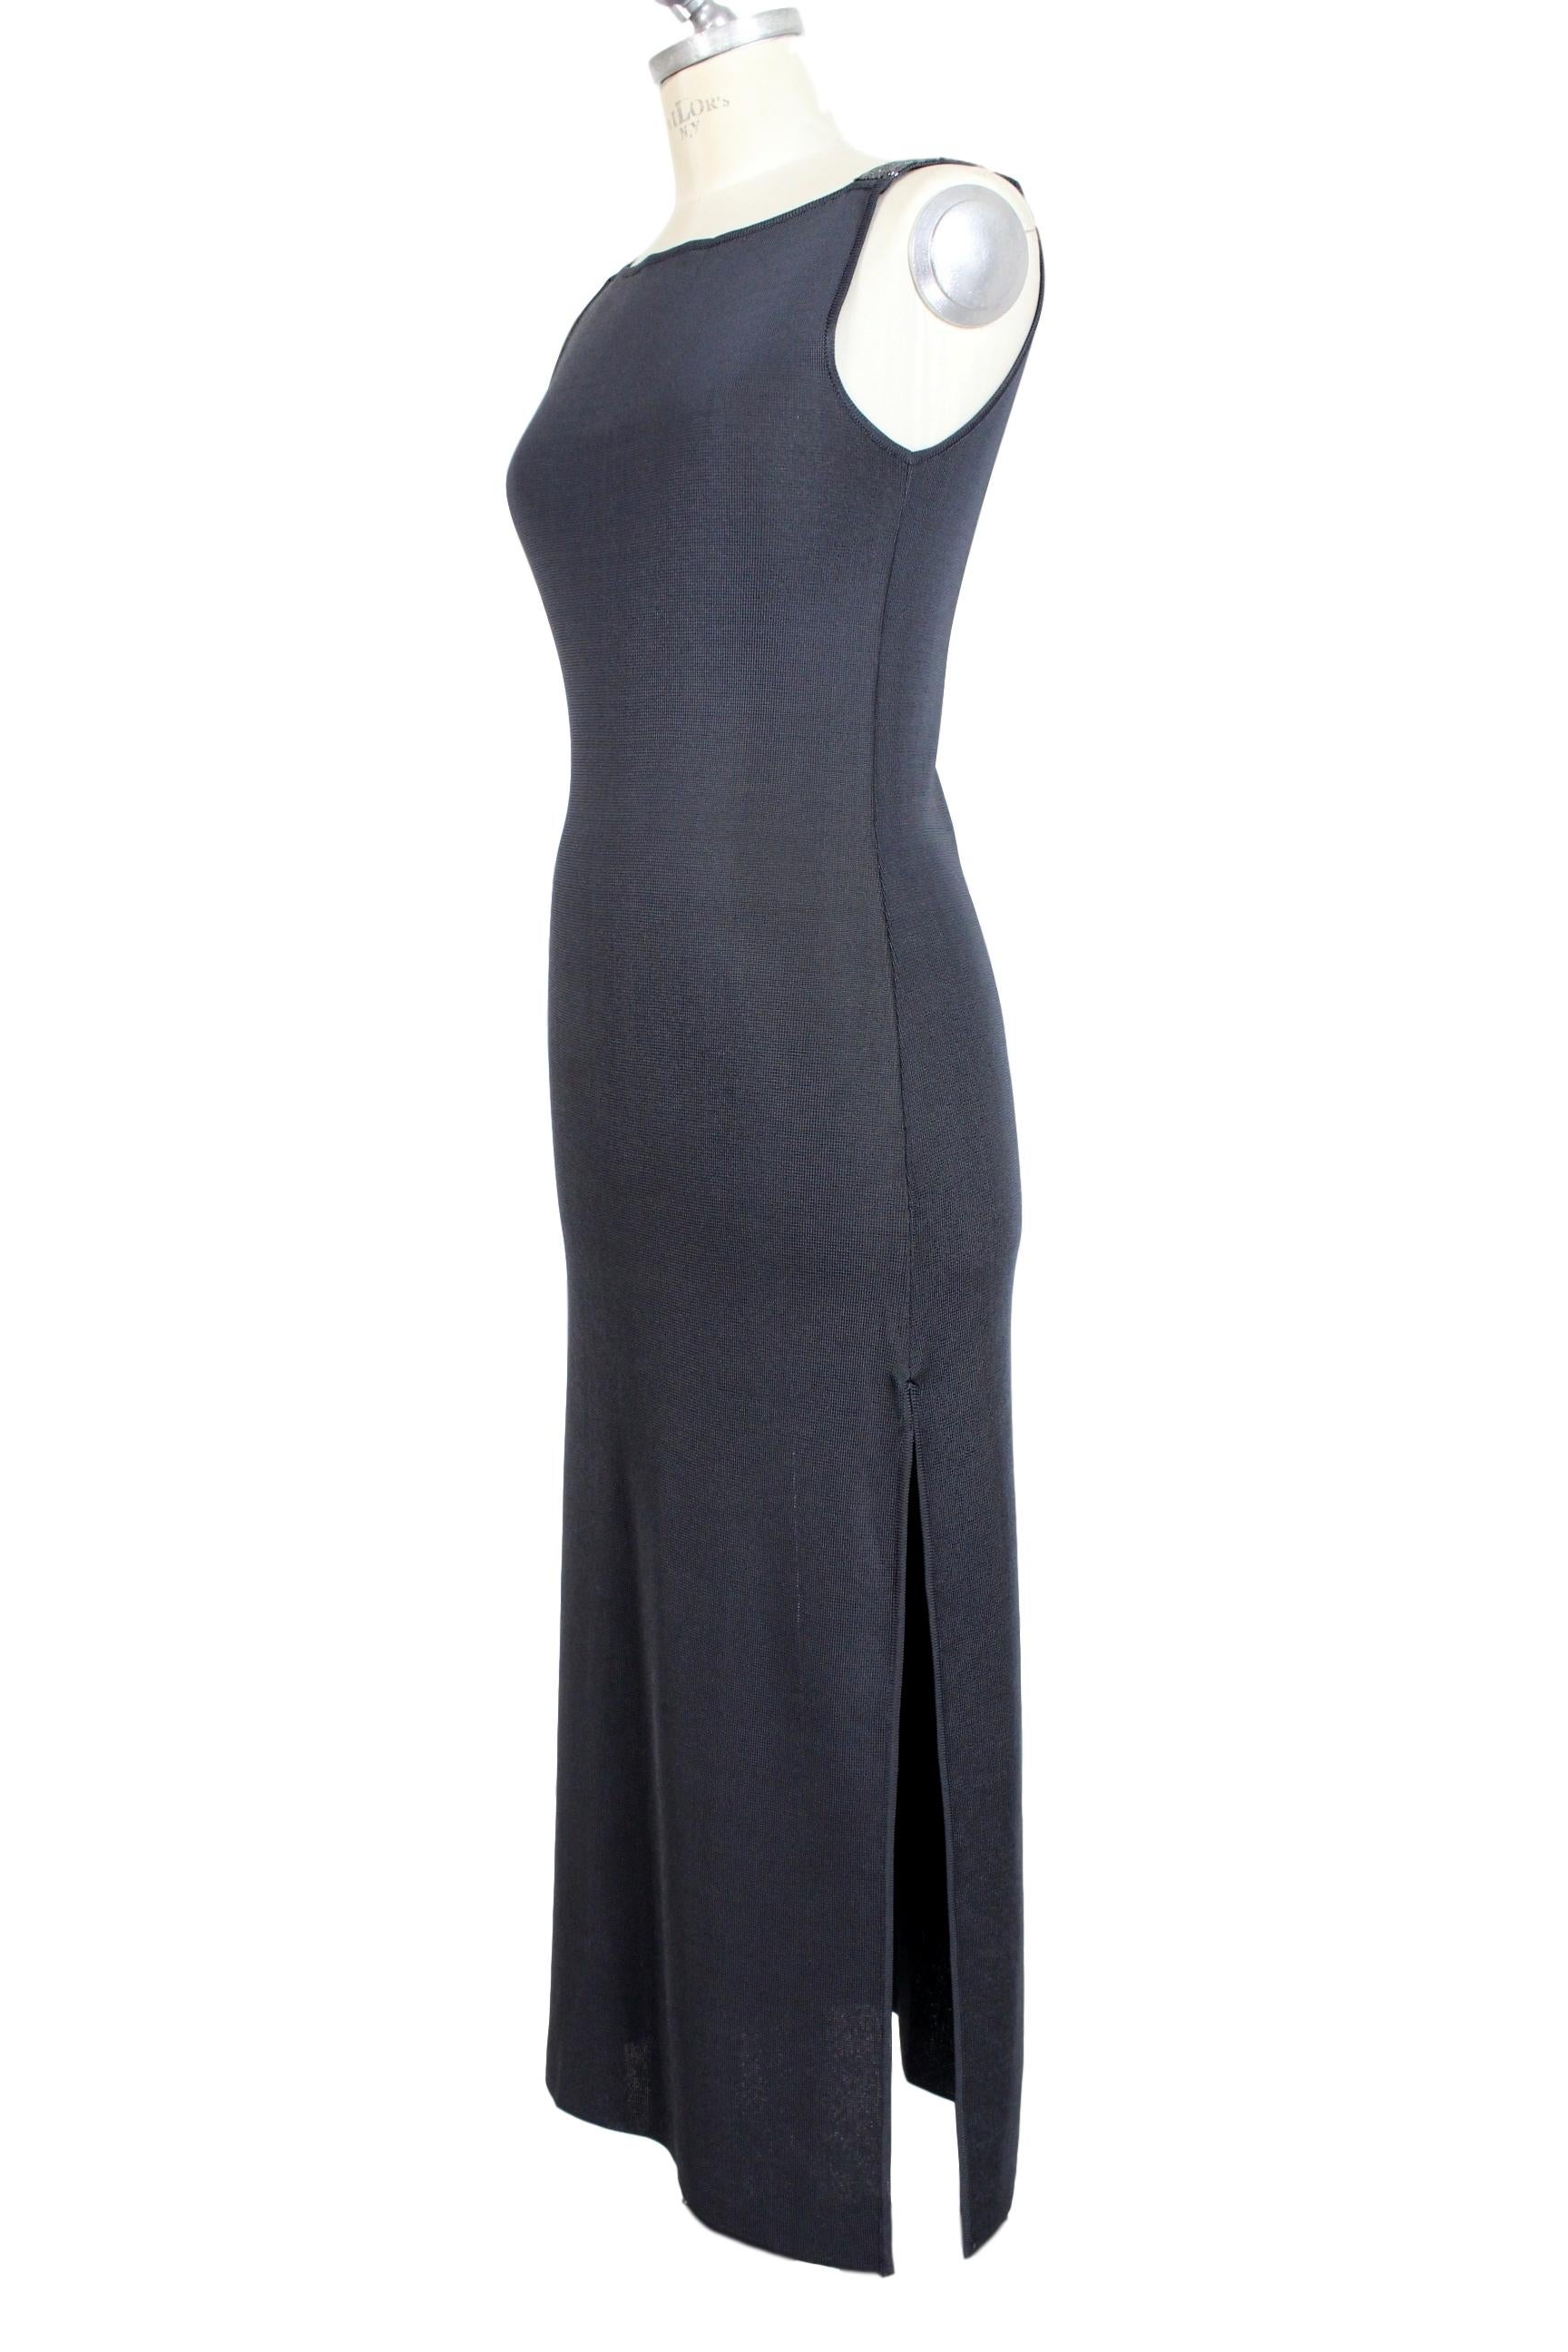 Gianfranco Ferre Viscose Gray Evening Sequins Long Sheath Sleeveless Dress 2